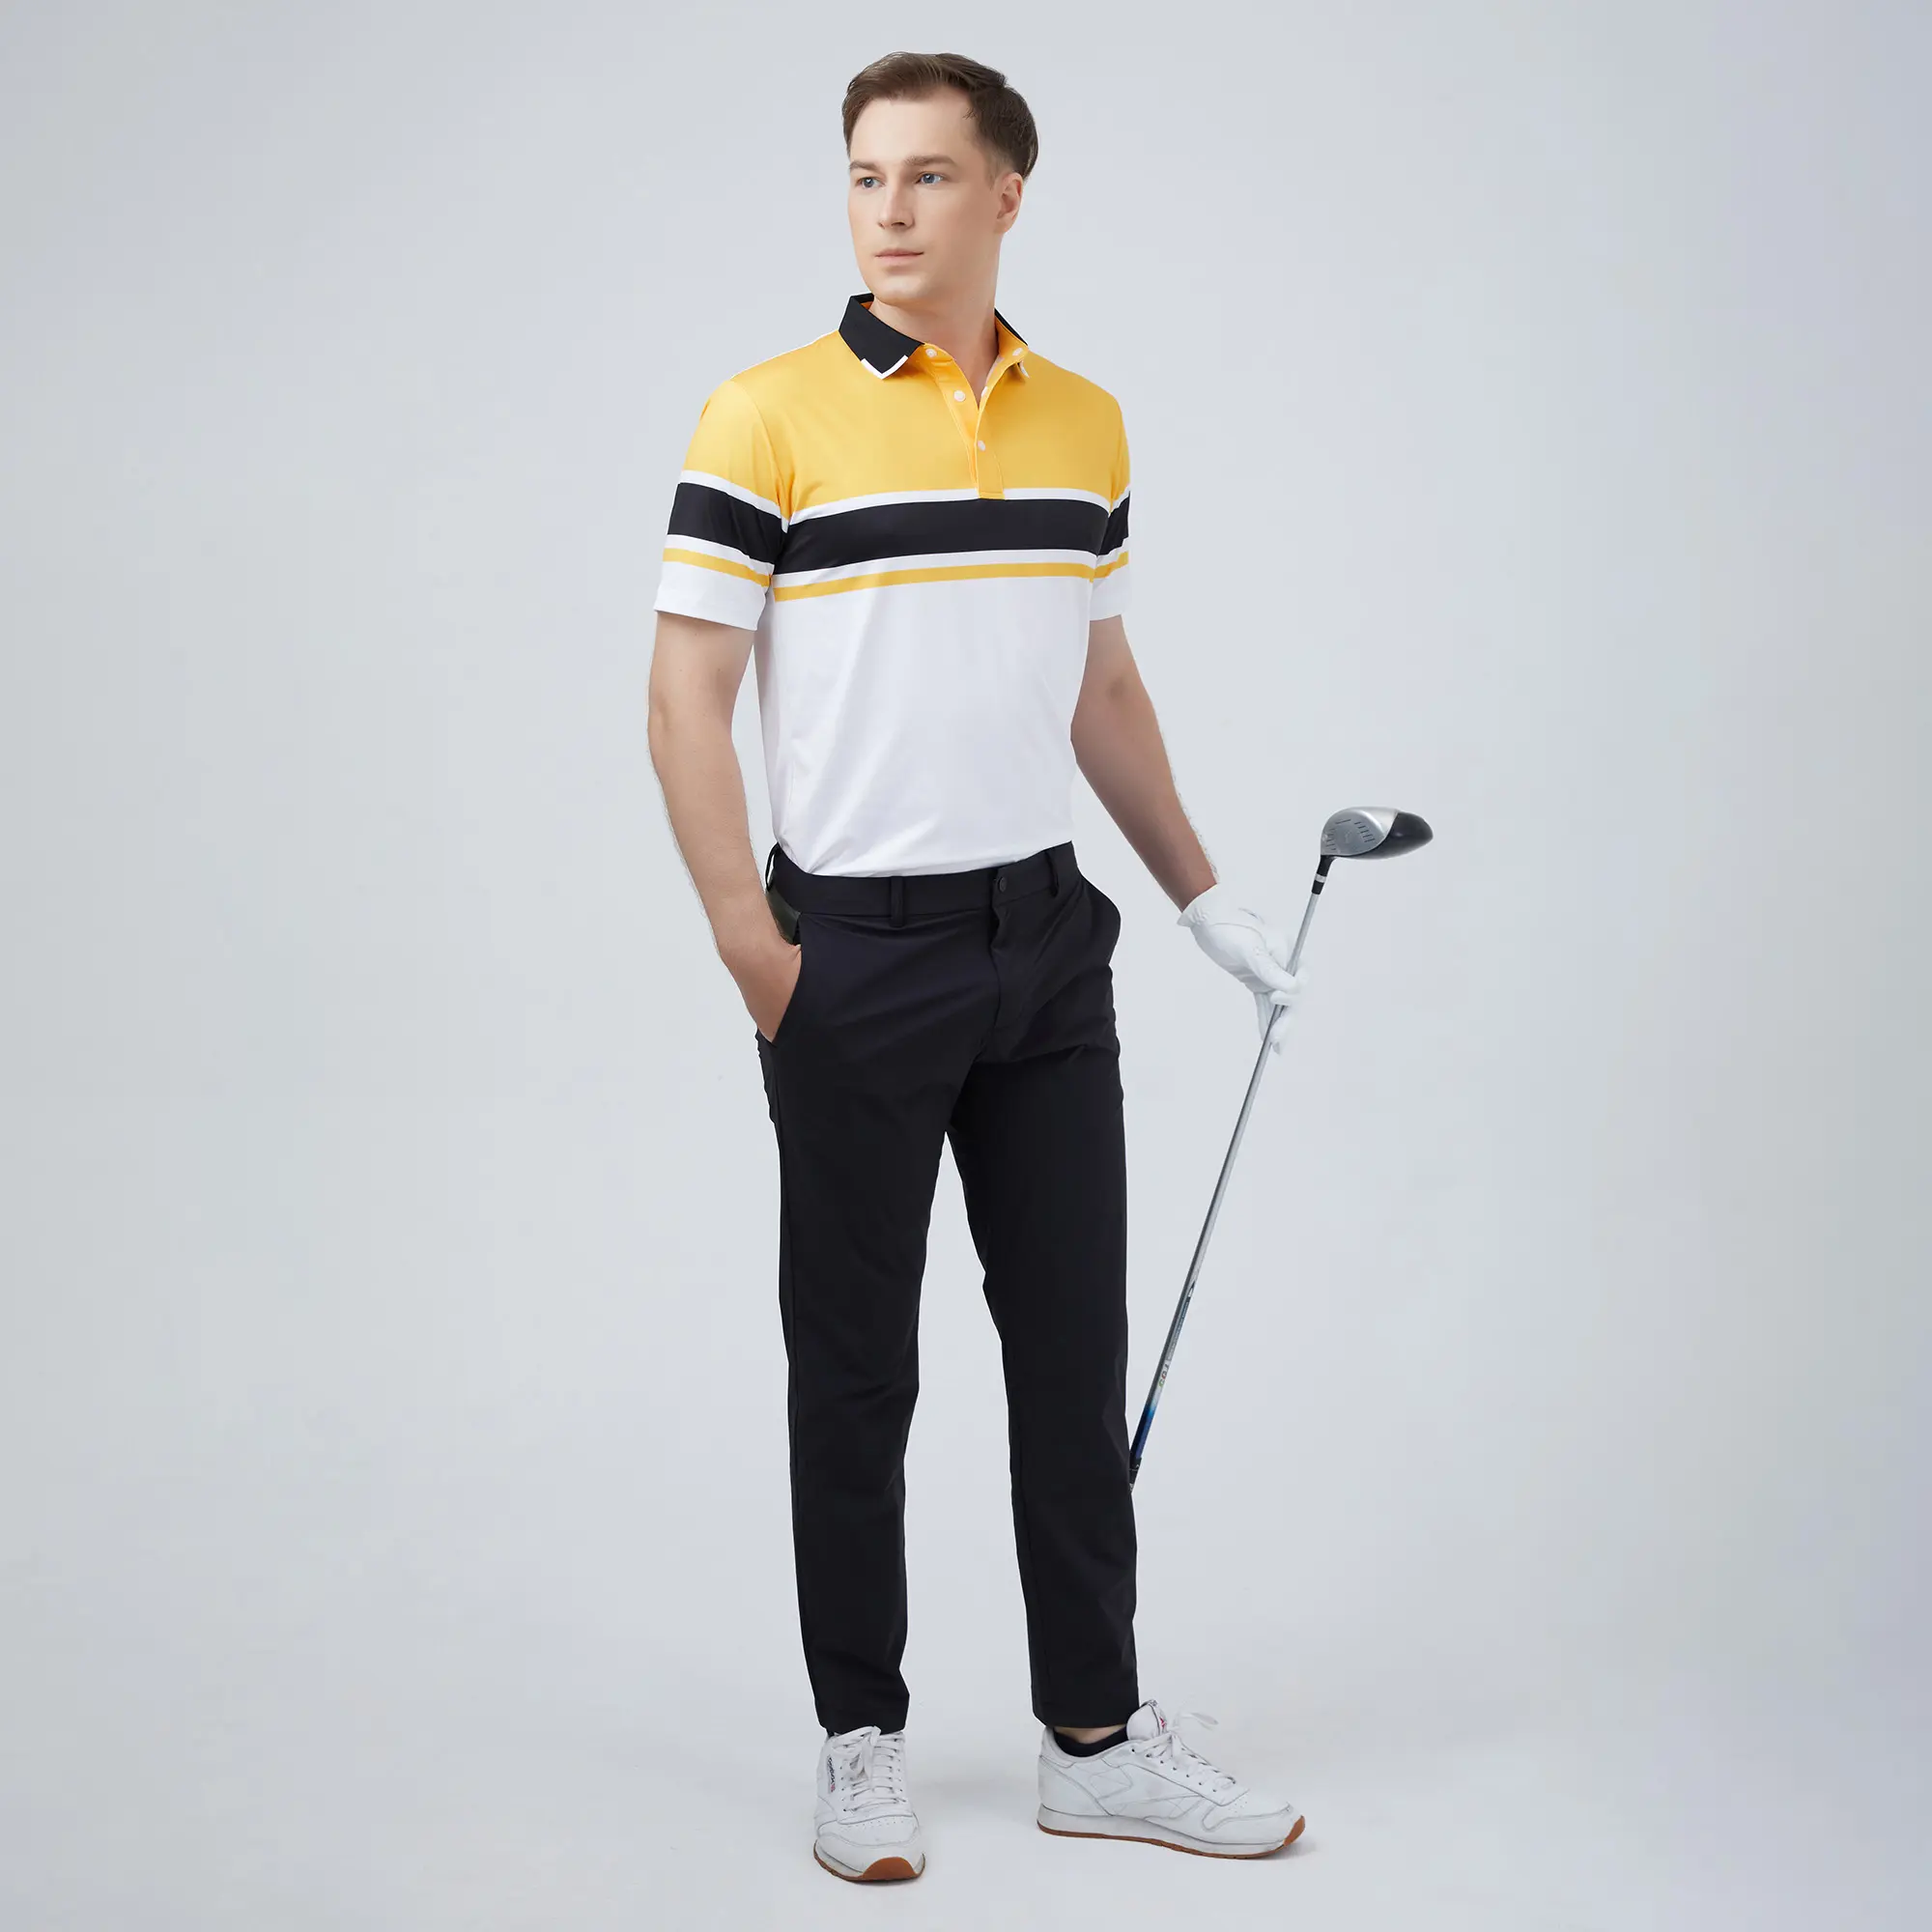 Wholesale Custom Logo Short Sleeve Men's Golf Polo Shirts: Popular Summer Apparel at Factory Prices